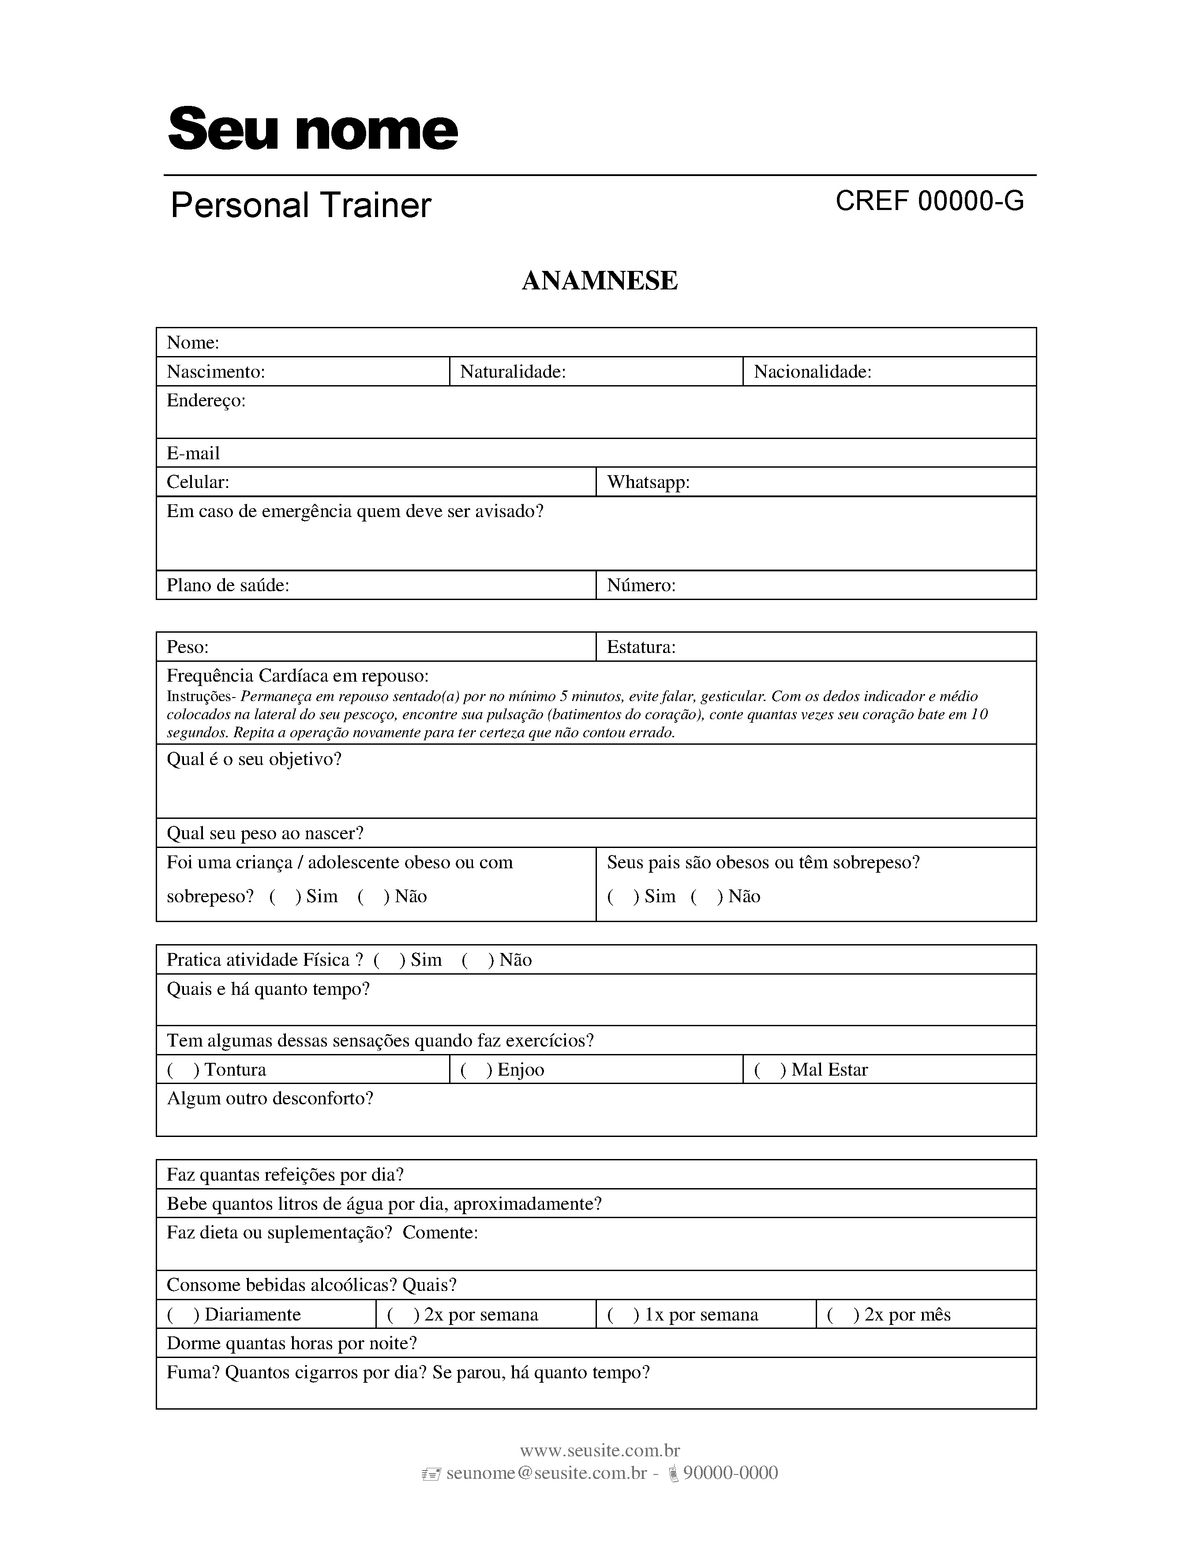 Ficha de Anamnese para Personal Trainer - 100% Personalizável